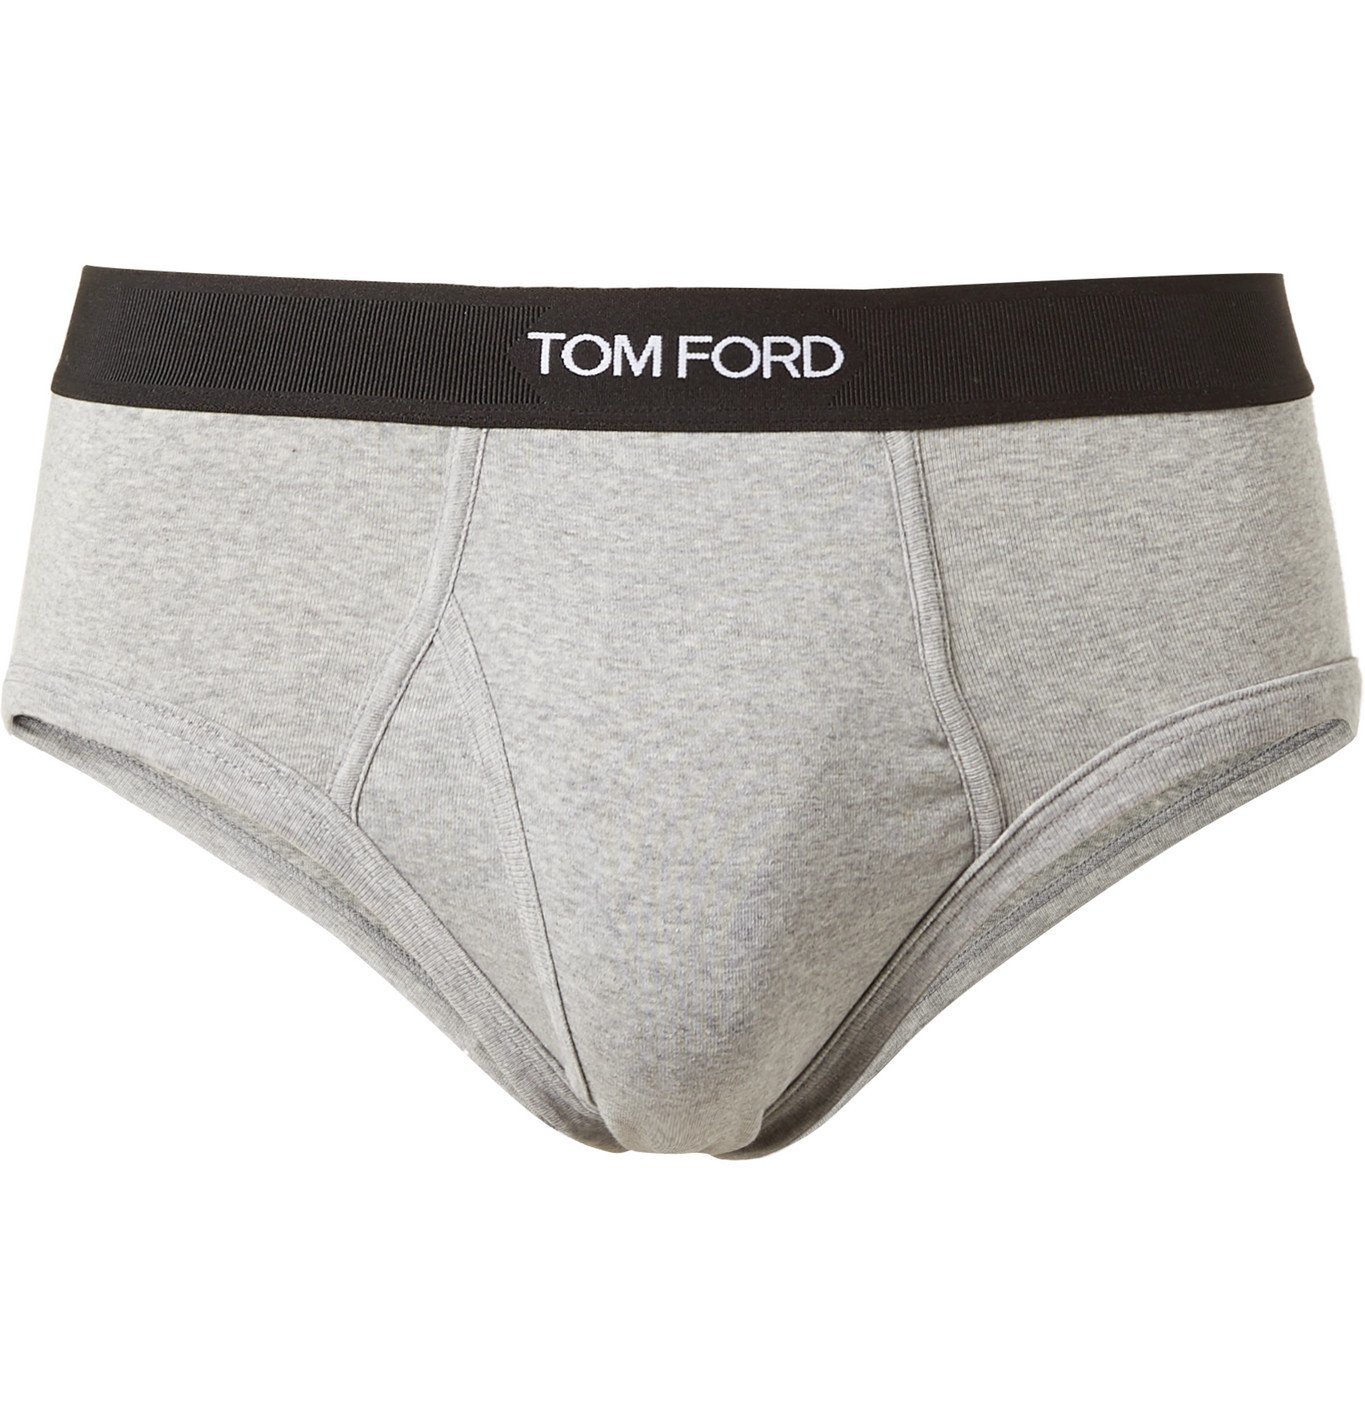 TOM FORD - Stretch-Cotton Briefs - Gray TOM FORD